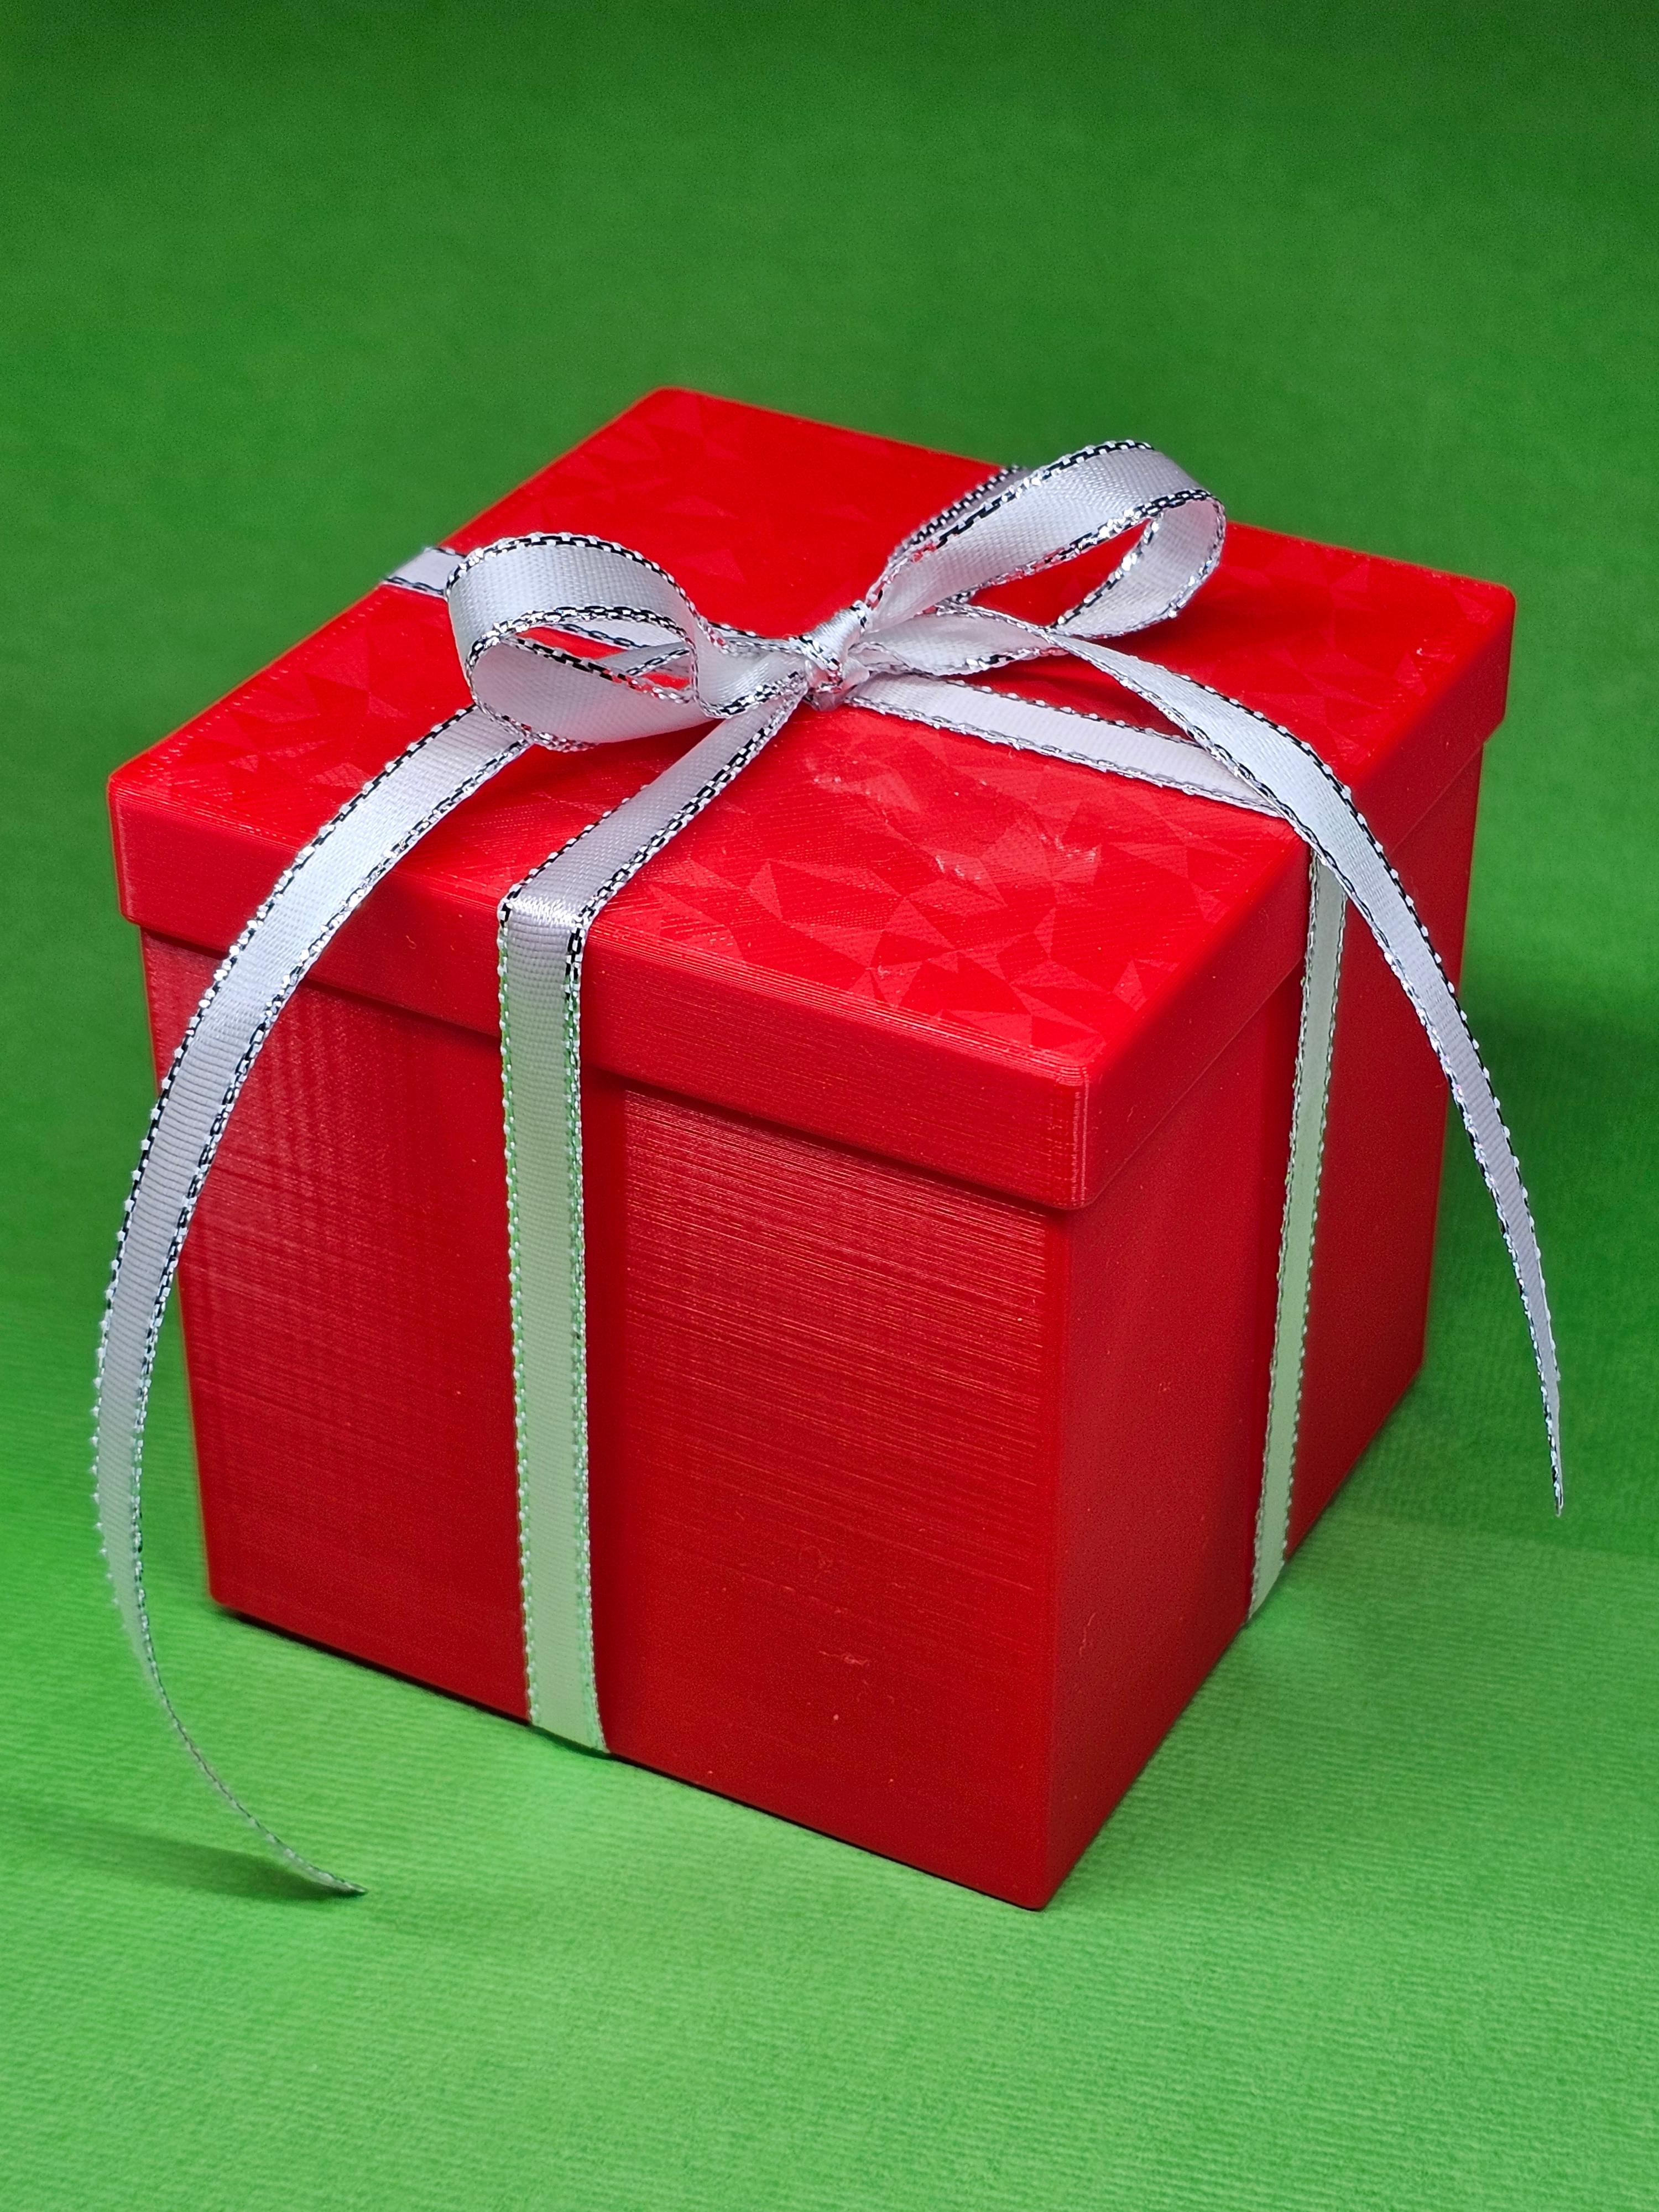 Ribbon Gift Box C Lite with ribbon loop and slot | Fits cash and various gifts | Christmas gift box 3d model